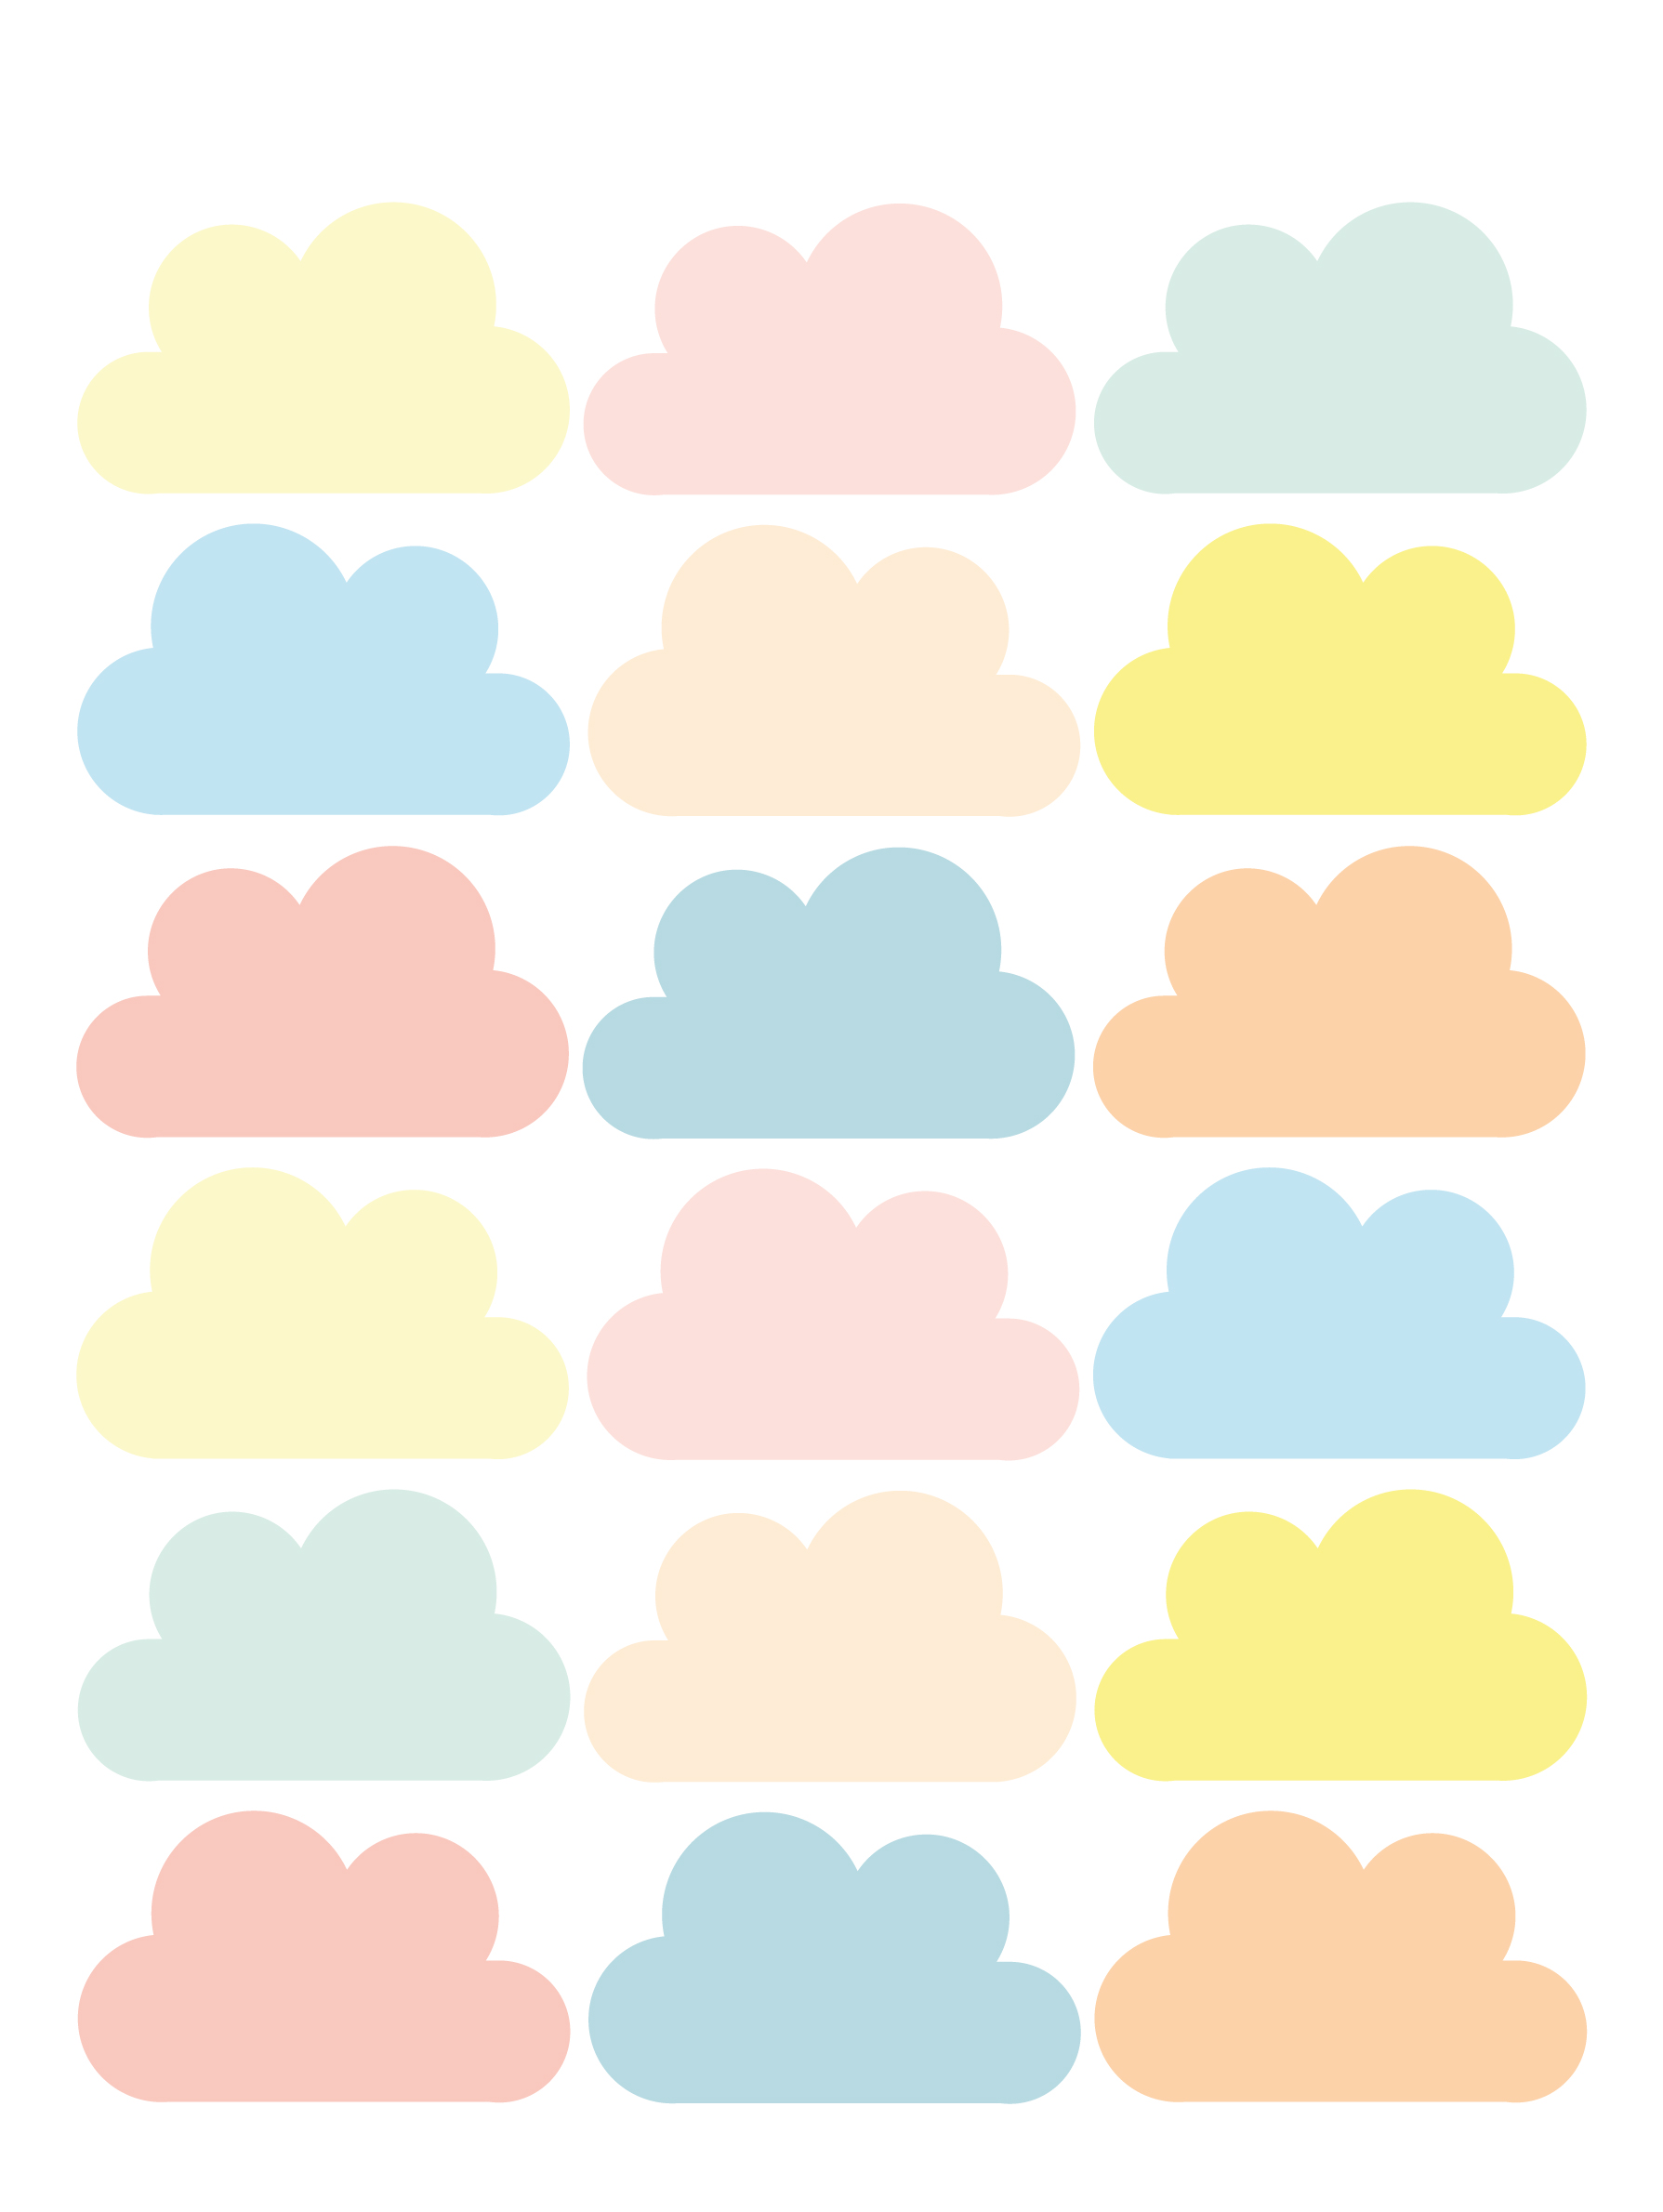 Download High Quality Cloud Pastel Transparent PNG Images